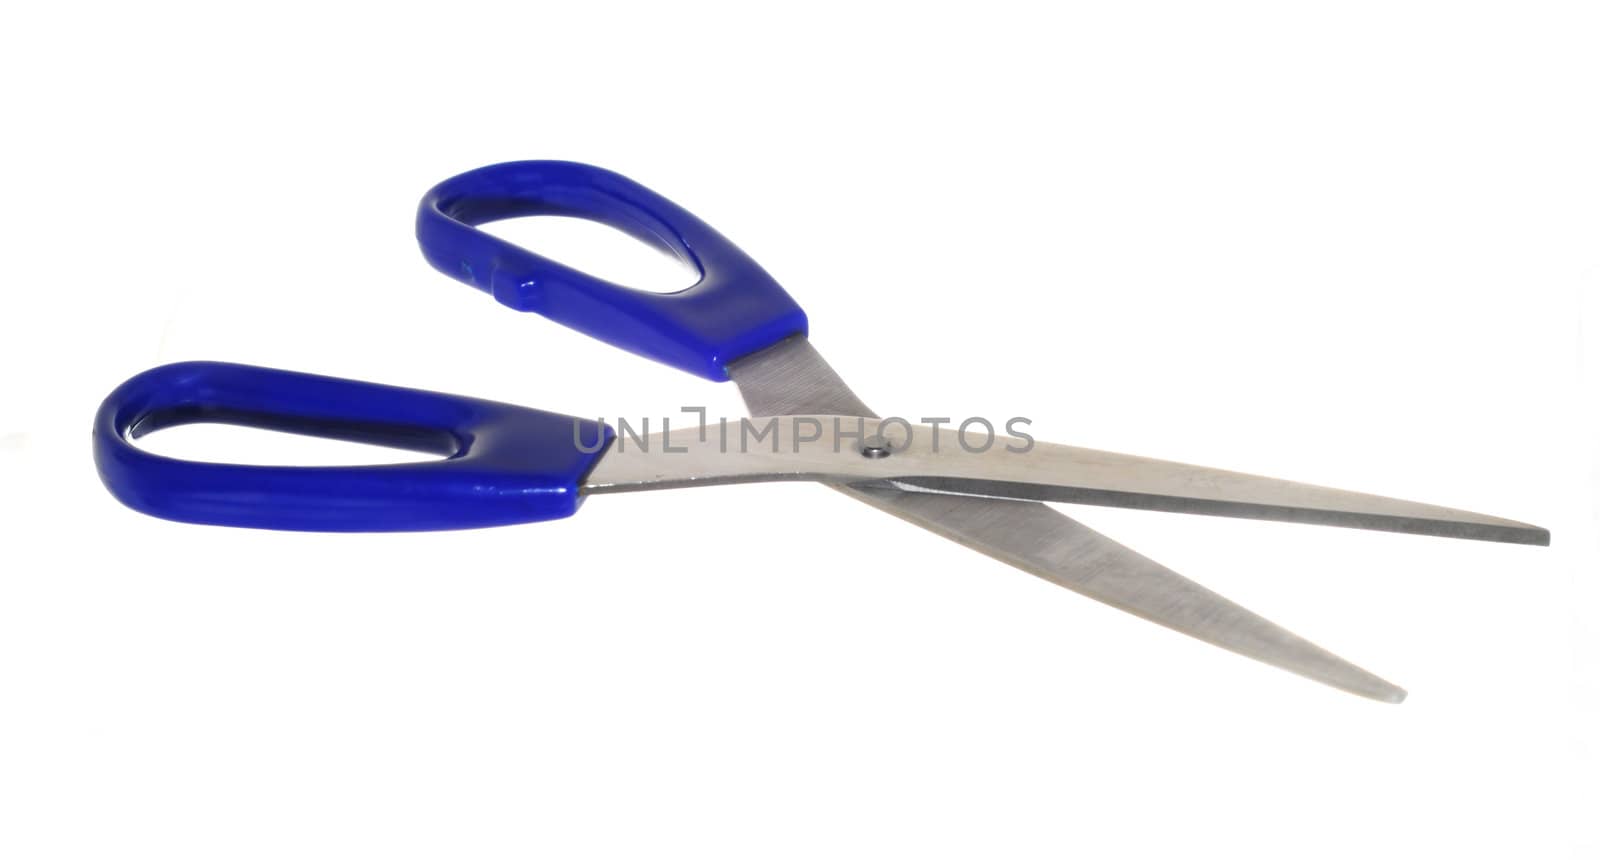  blue scissor isolated over white